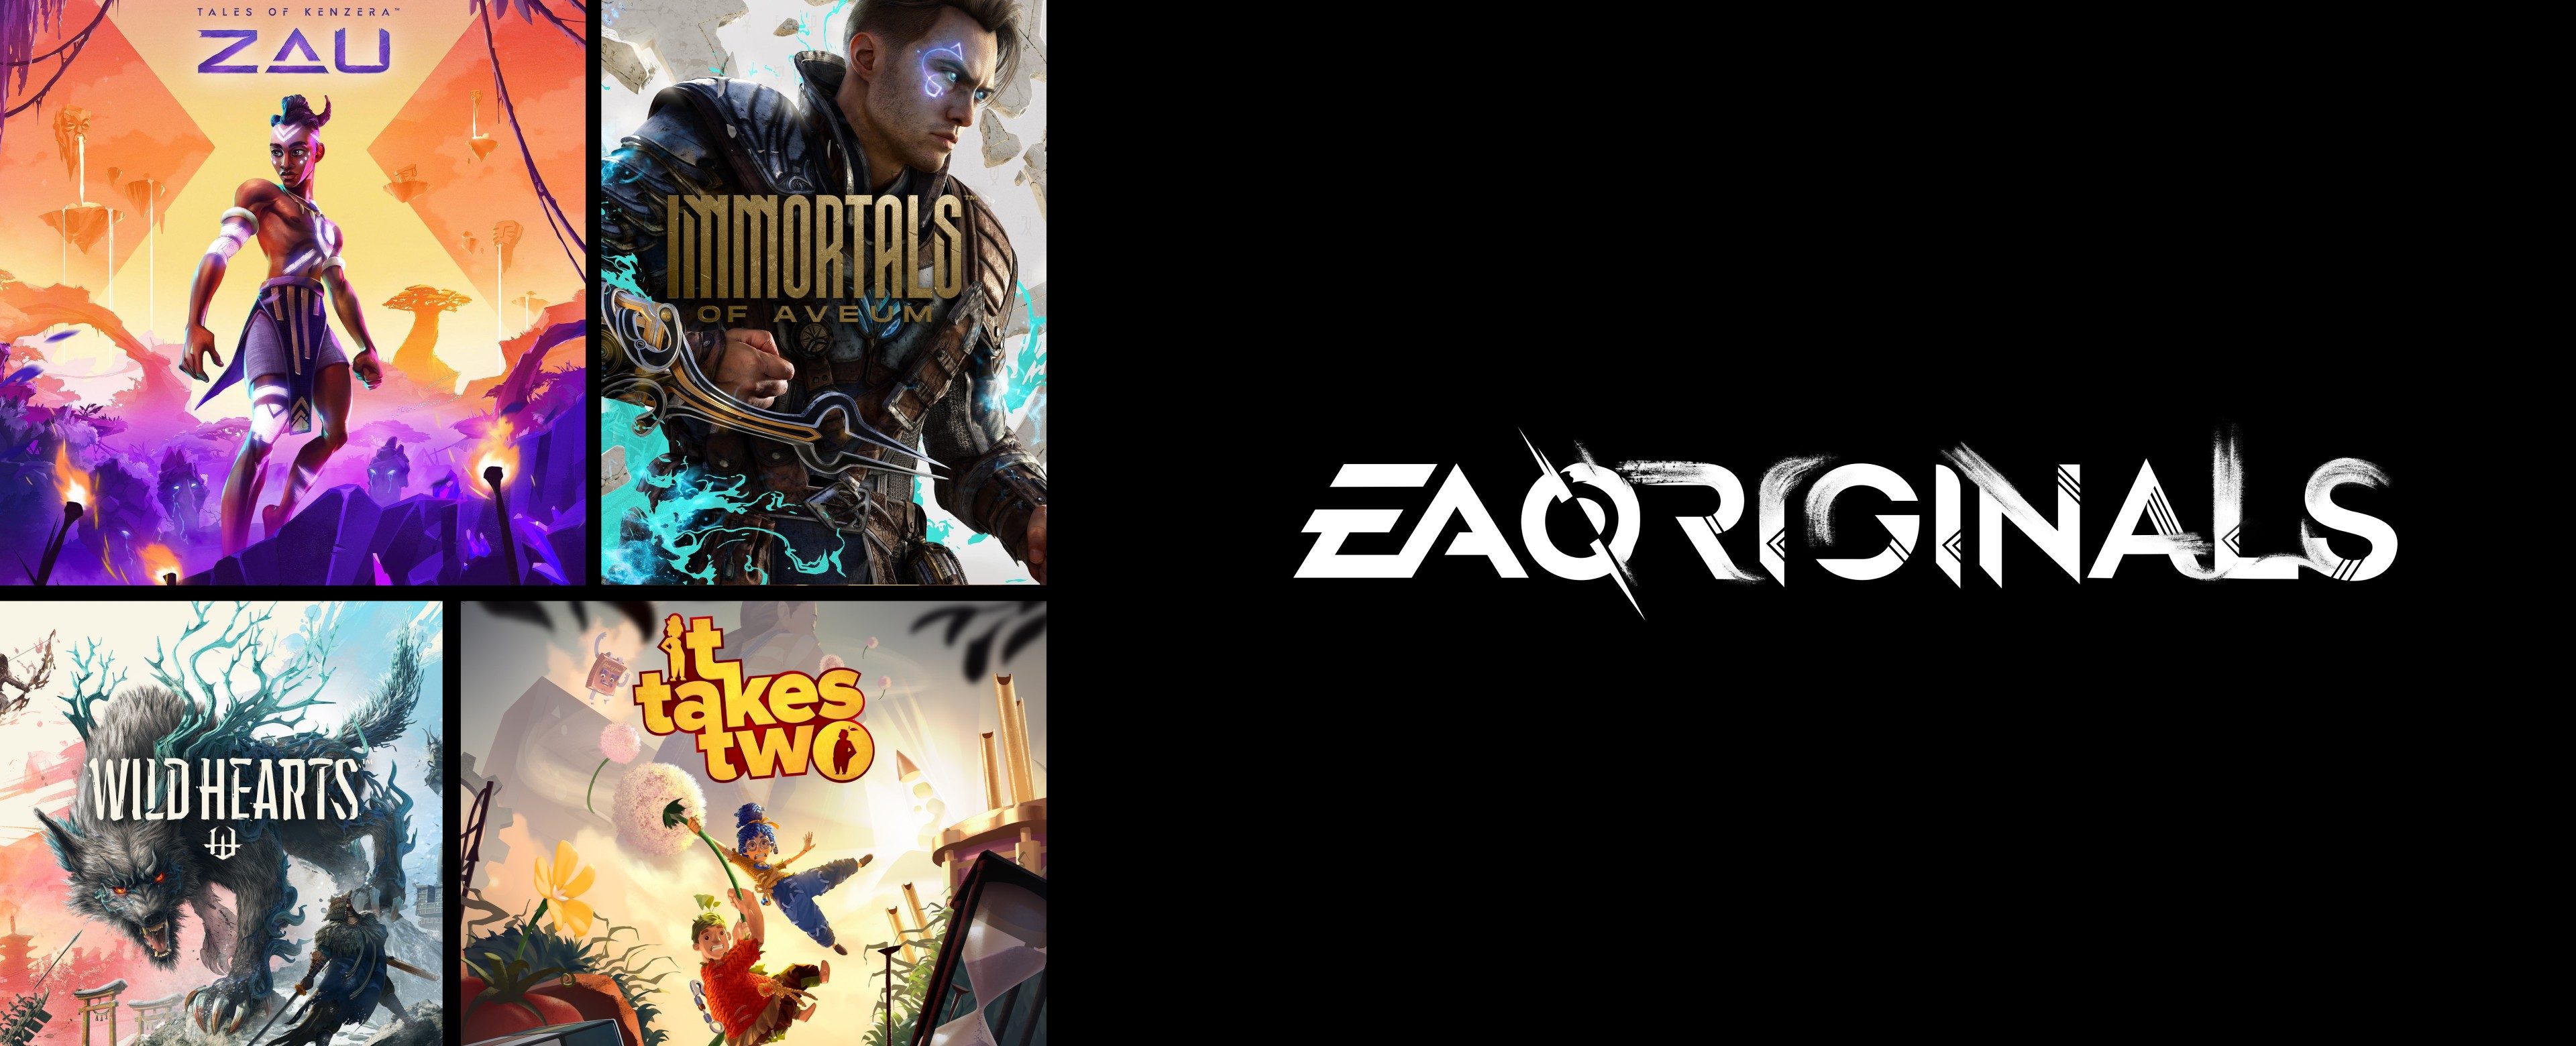 Origin, EA Games Wikia